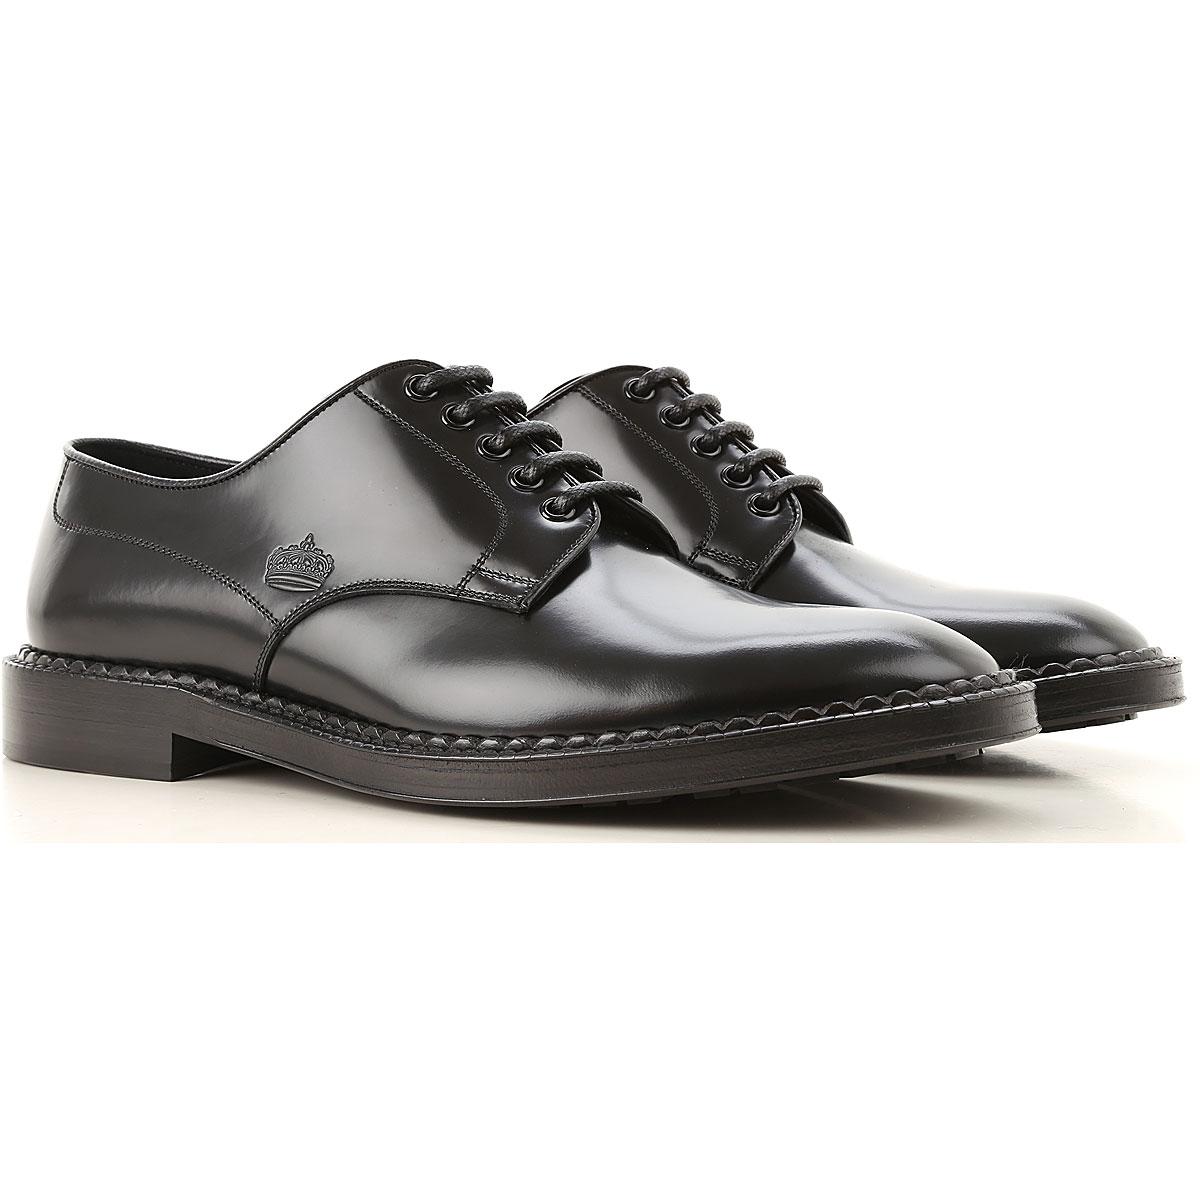 Dolce & Gabbana Lace Up Shoes For Men Oxfords in Black for Men - Lyst